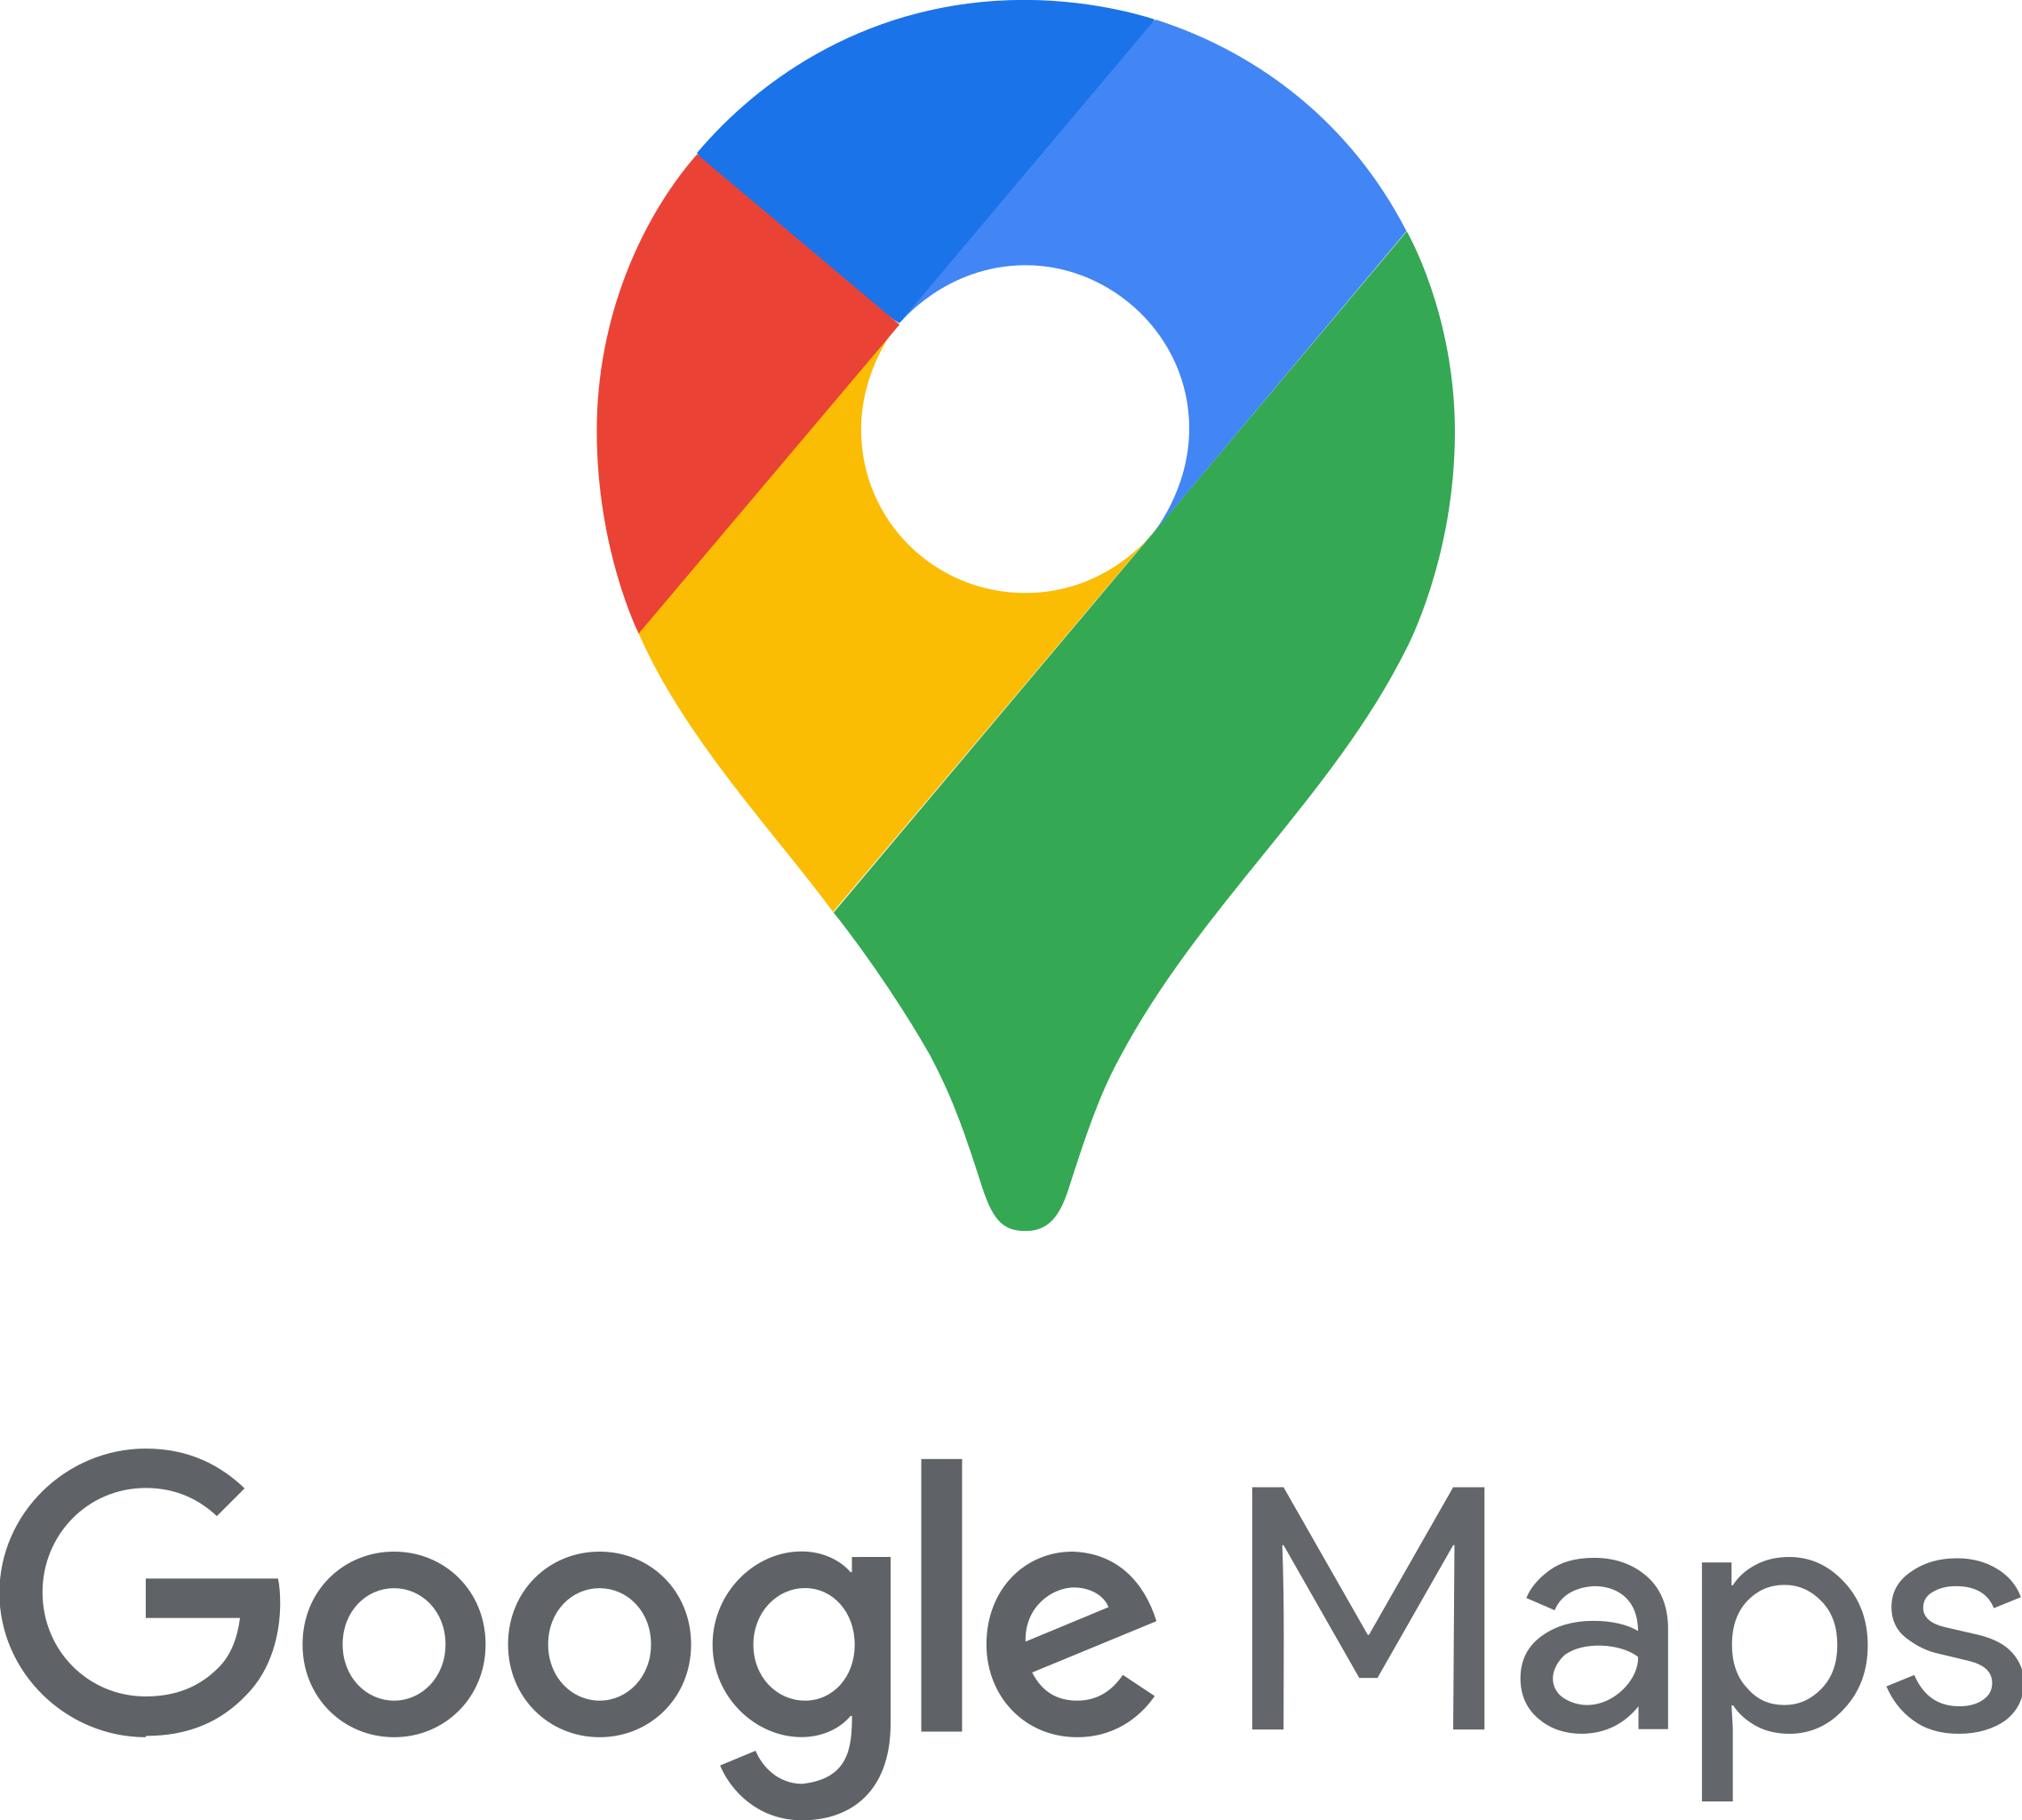 Google maps logo for SEO Sheffield